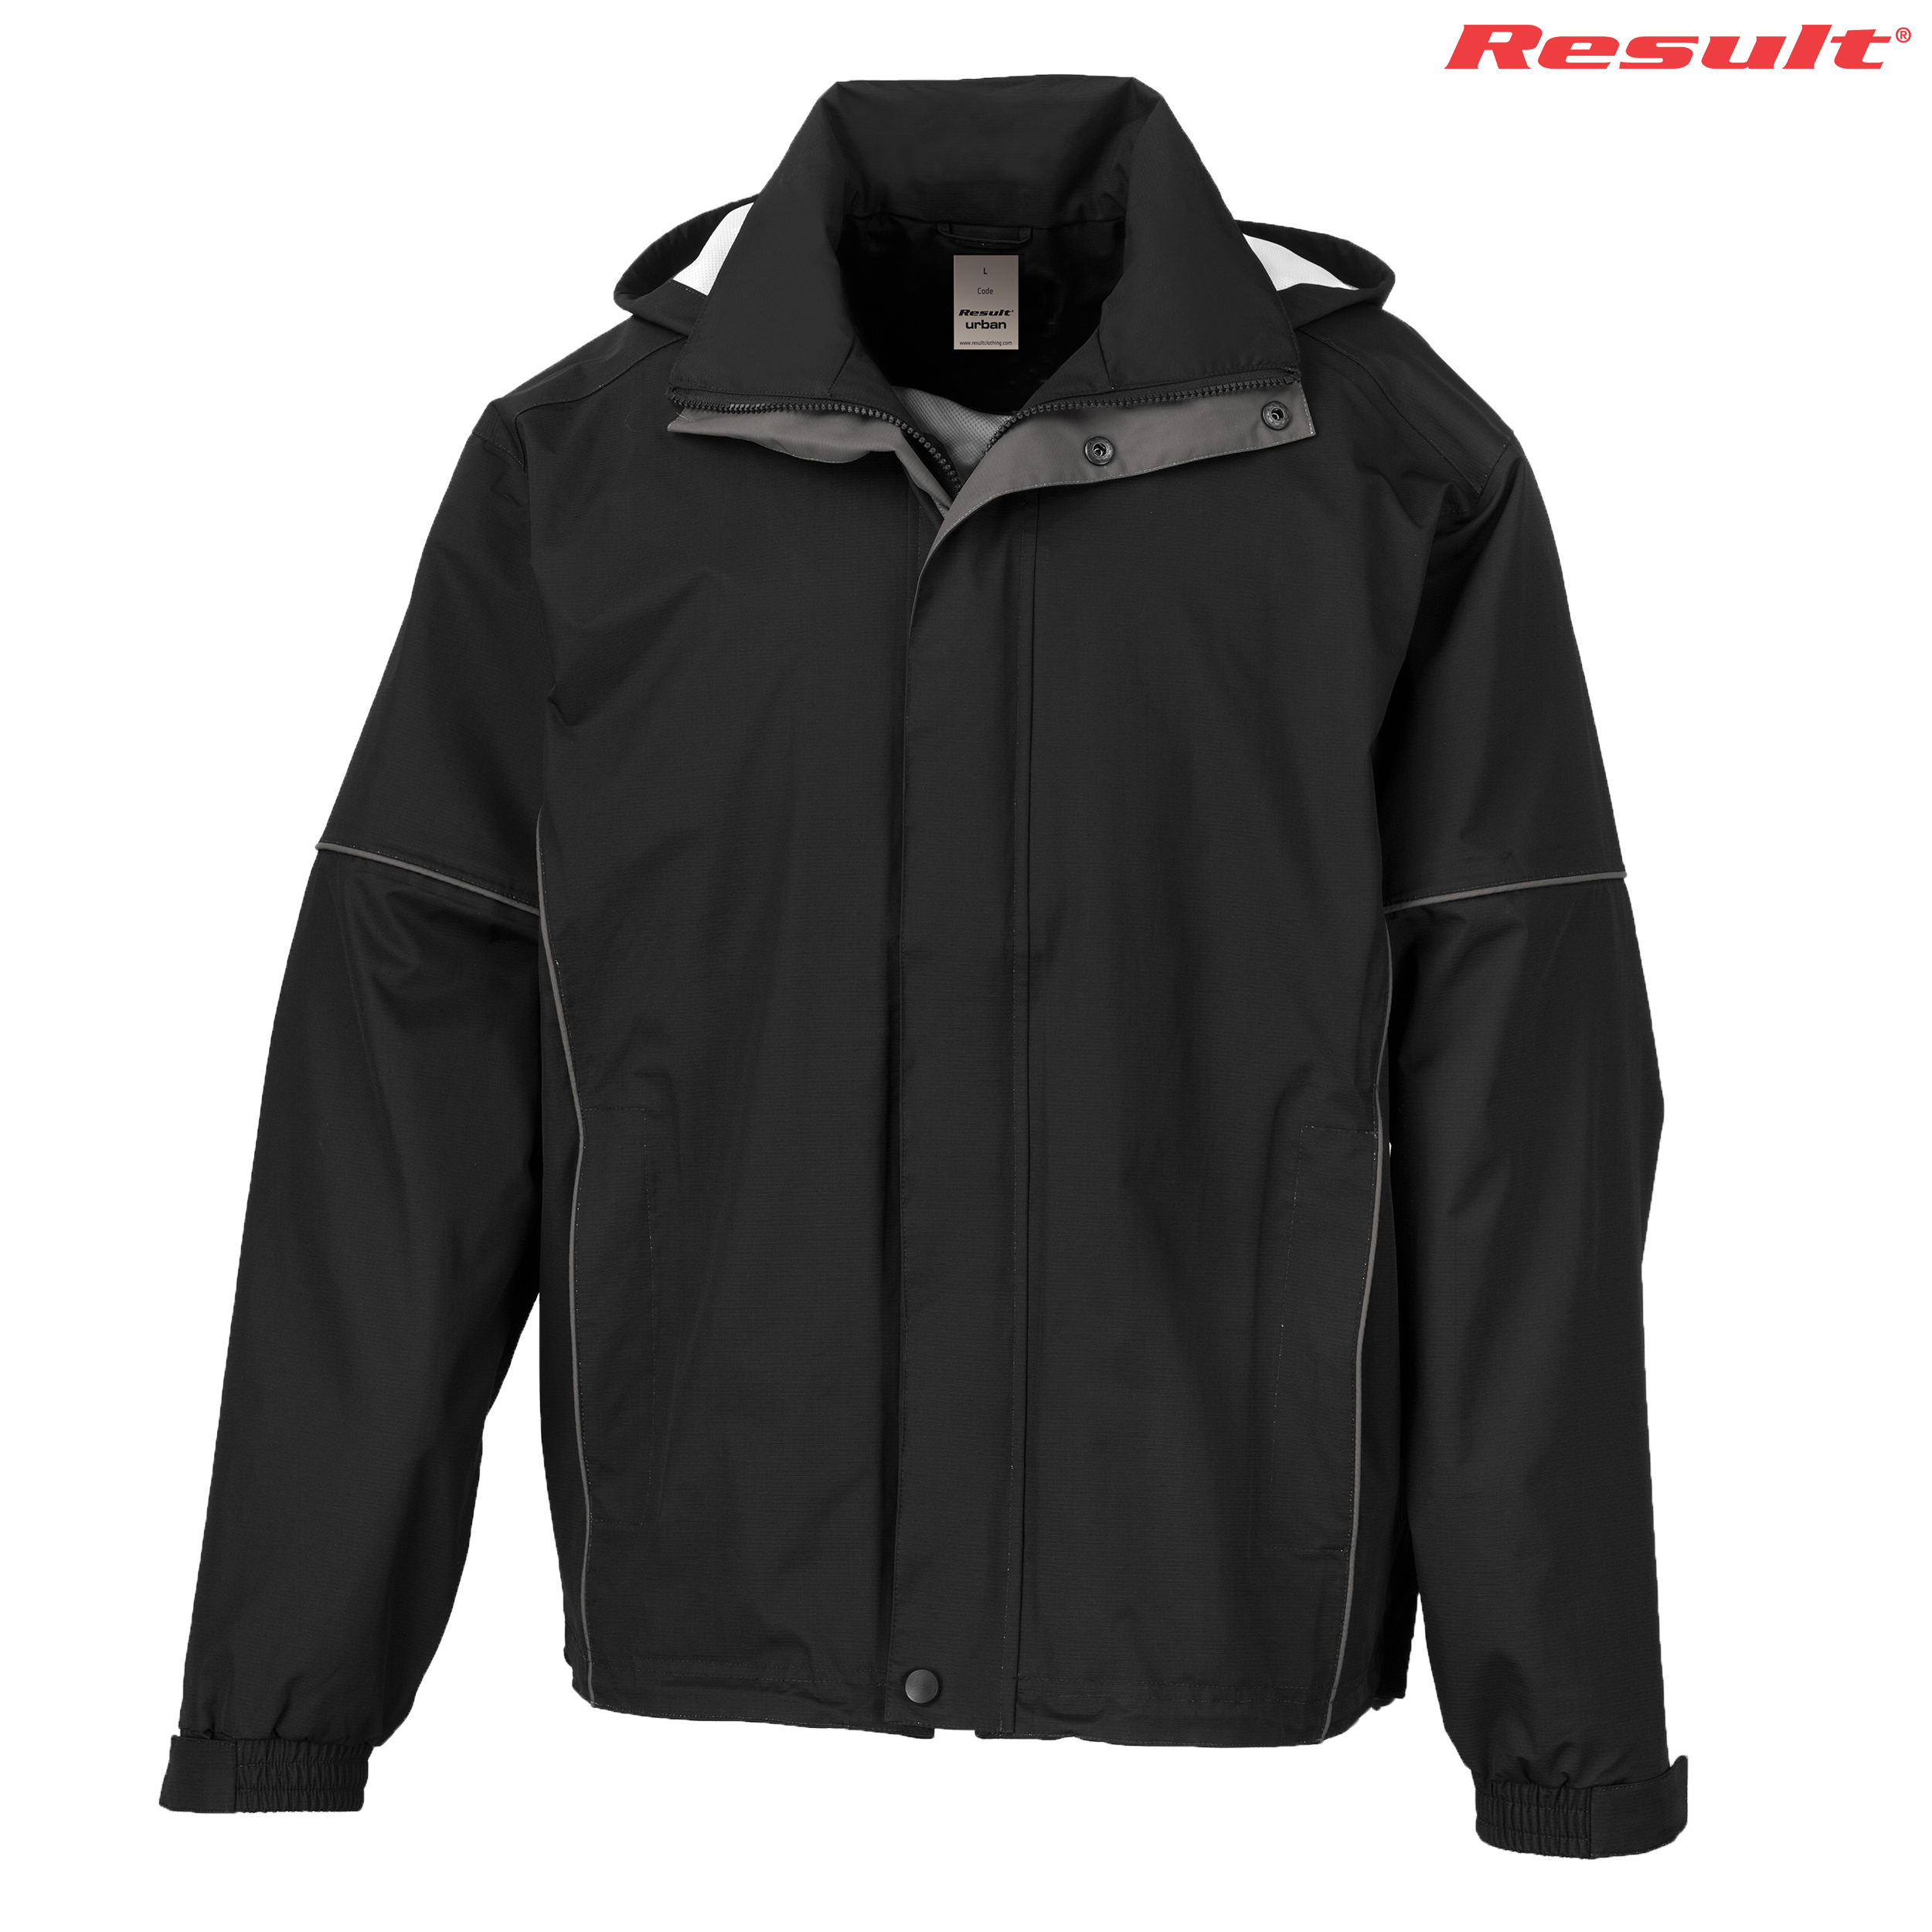 Premium Apparel R111X Result Adult Urban Fell Technical Jacket